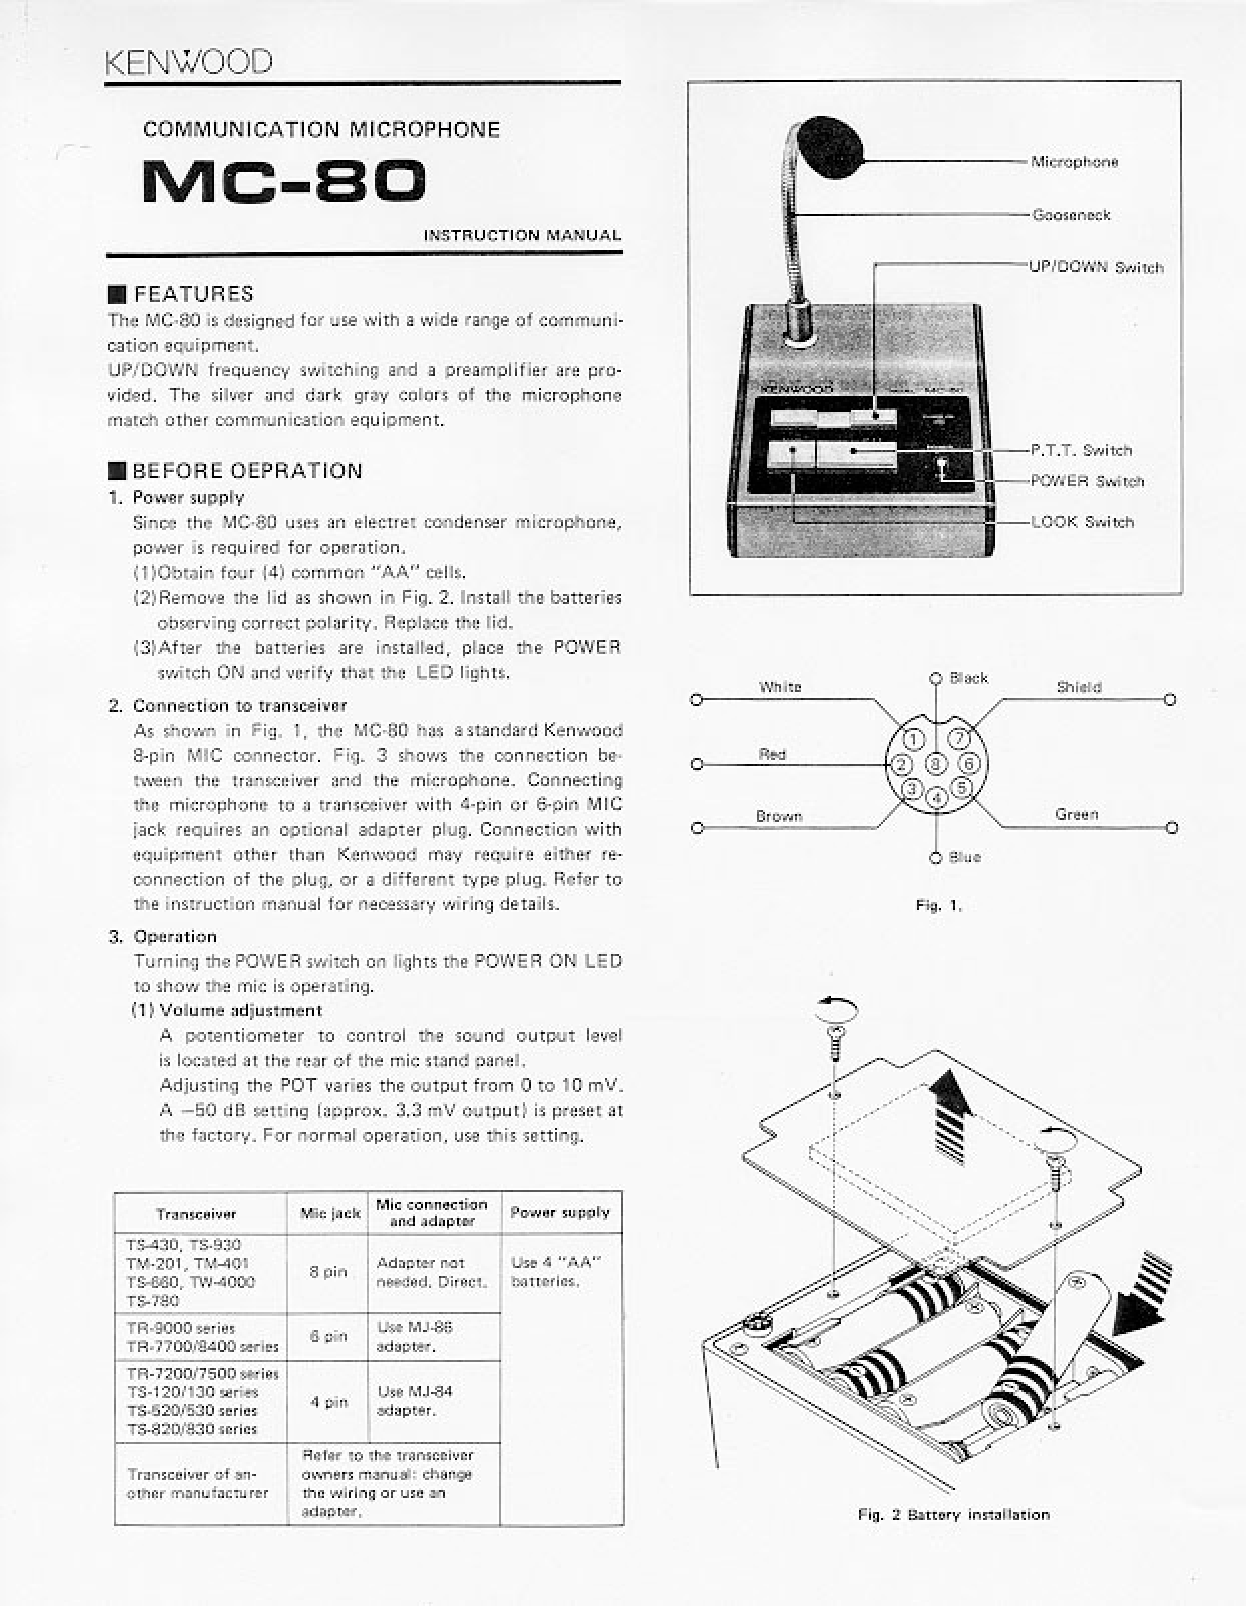 Kenwood MC-80 User Manual